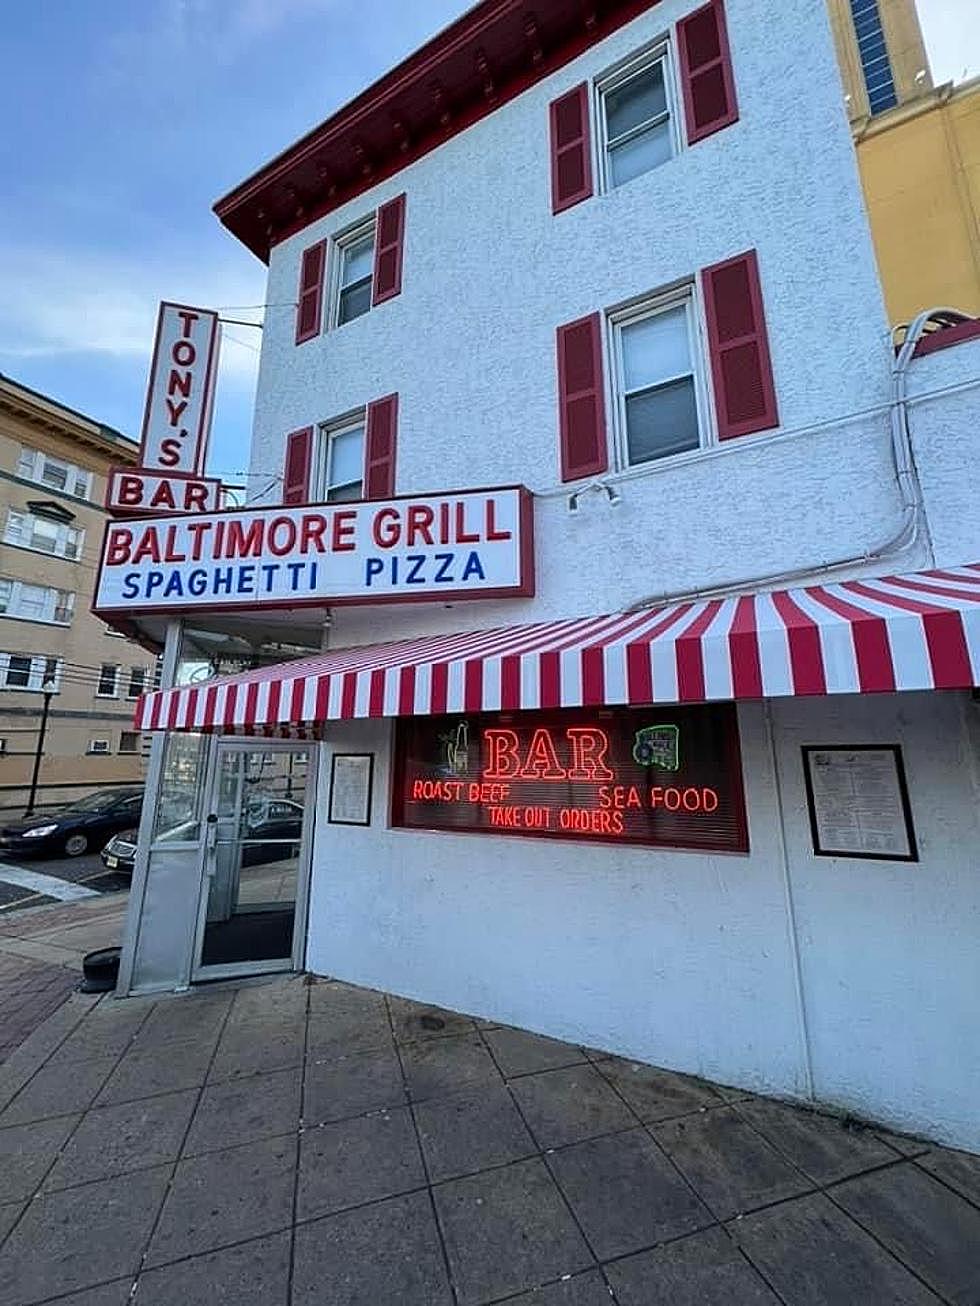 44-Year Tony’s Baltimore Grill Atlantic City Employee Receives Honor